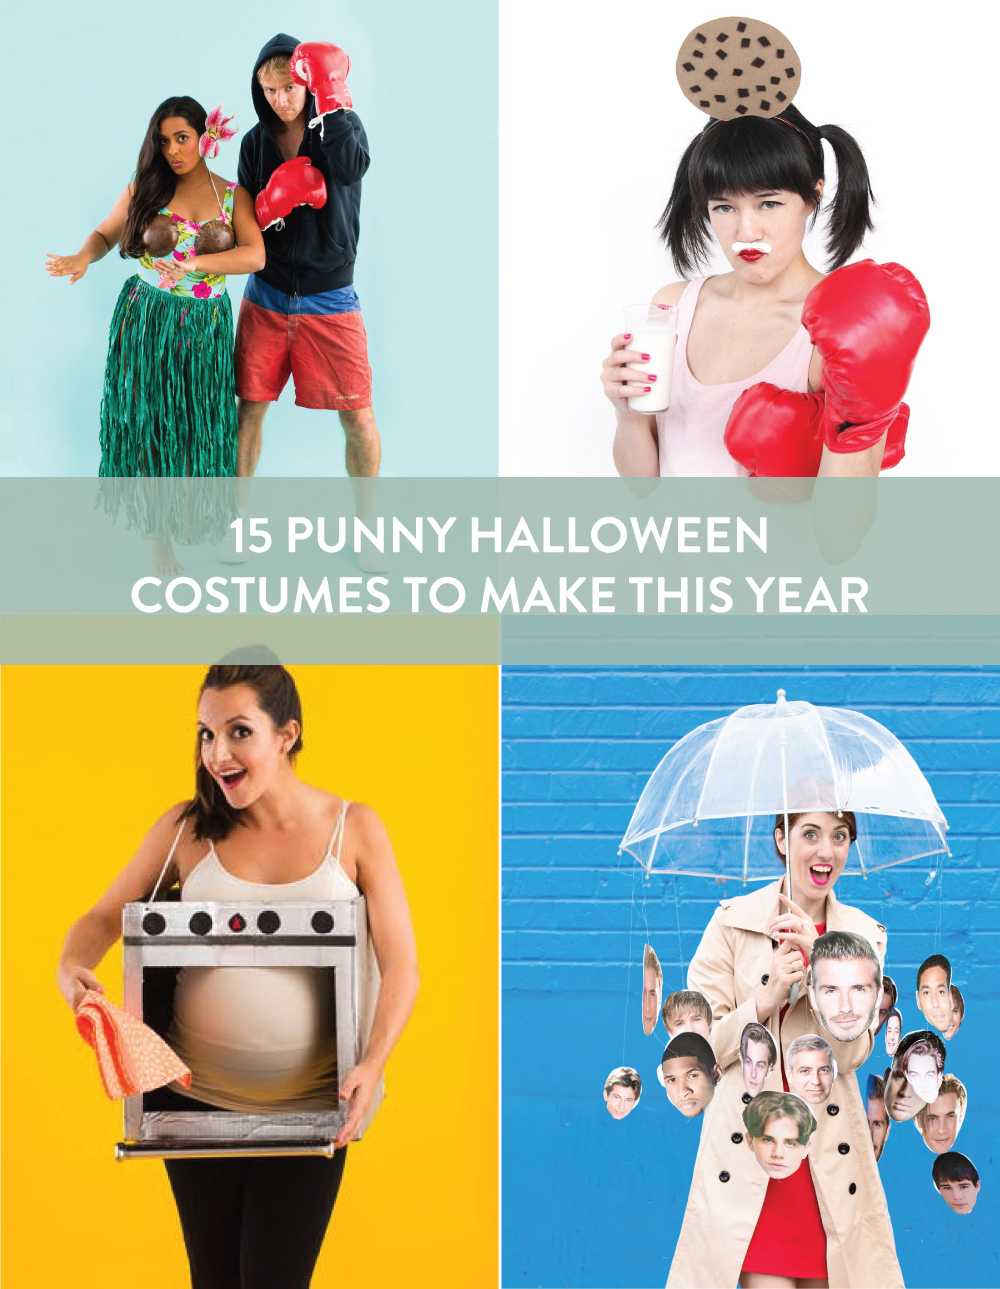 Punny Halloween costumes